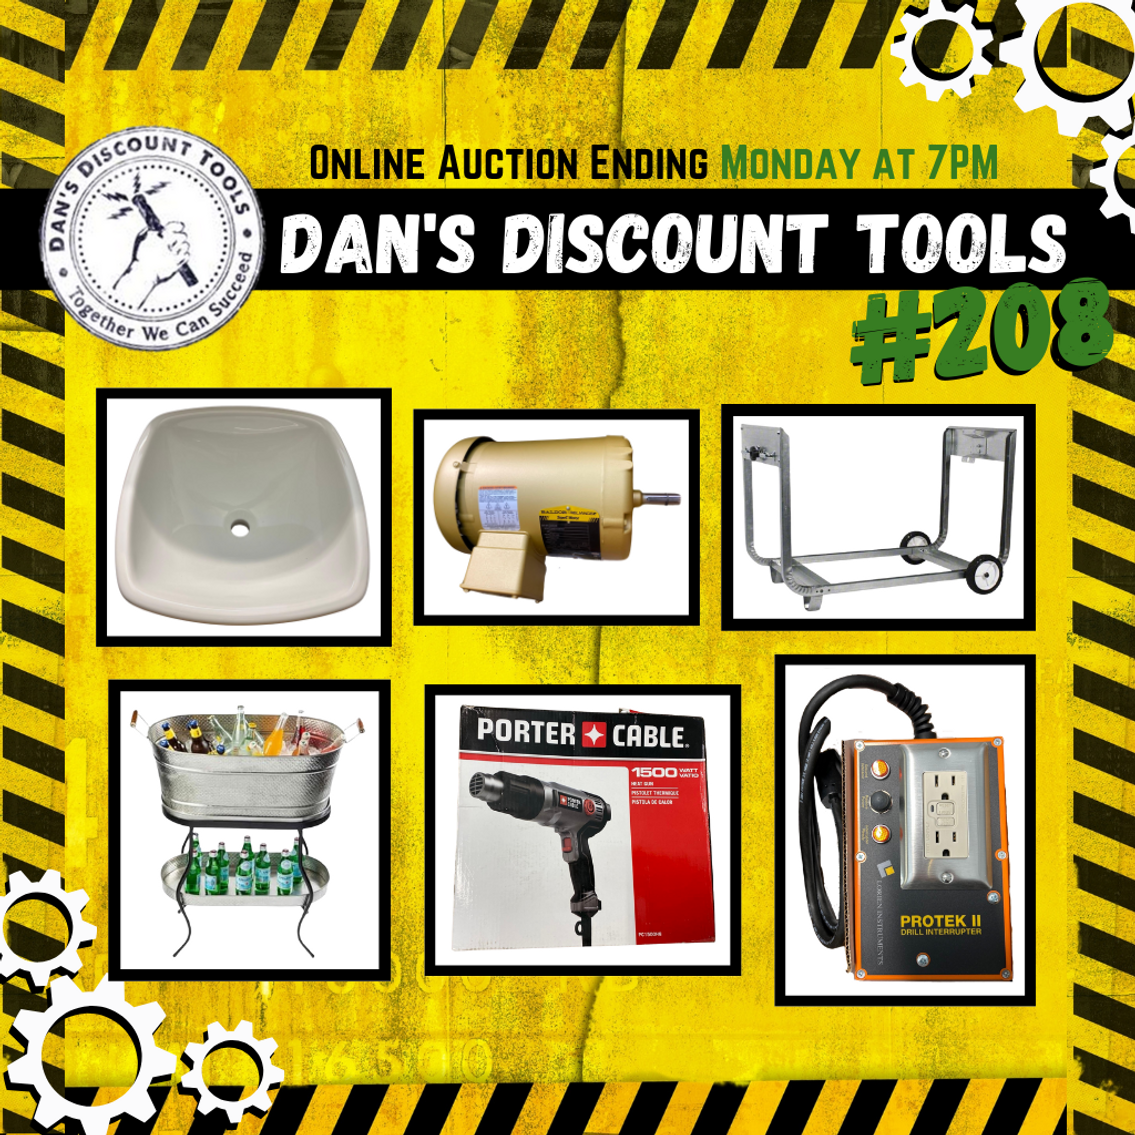 Dan's Discount Tools #208